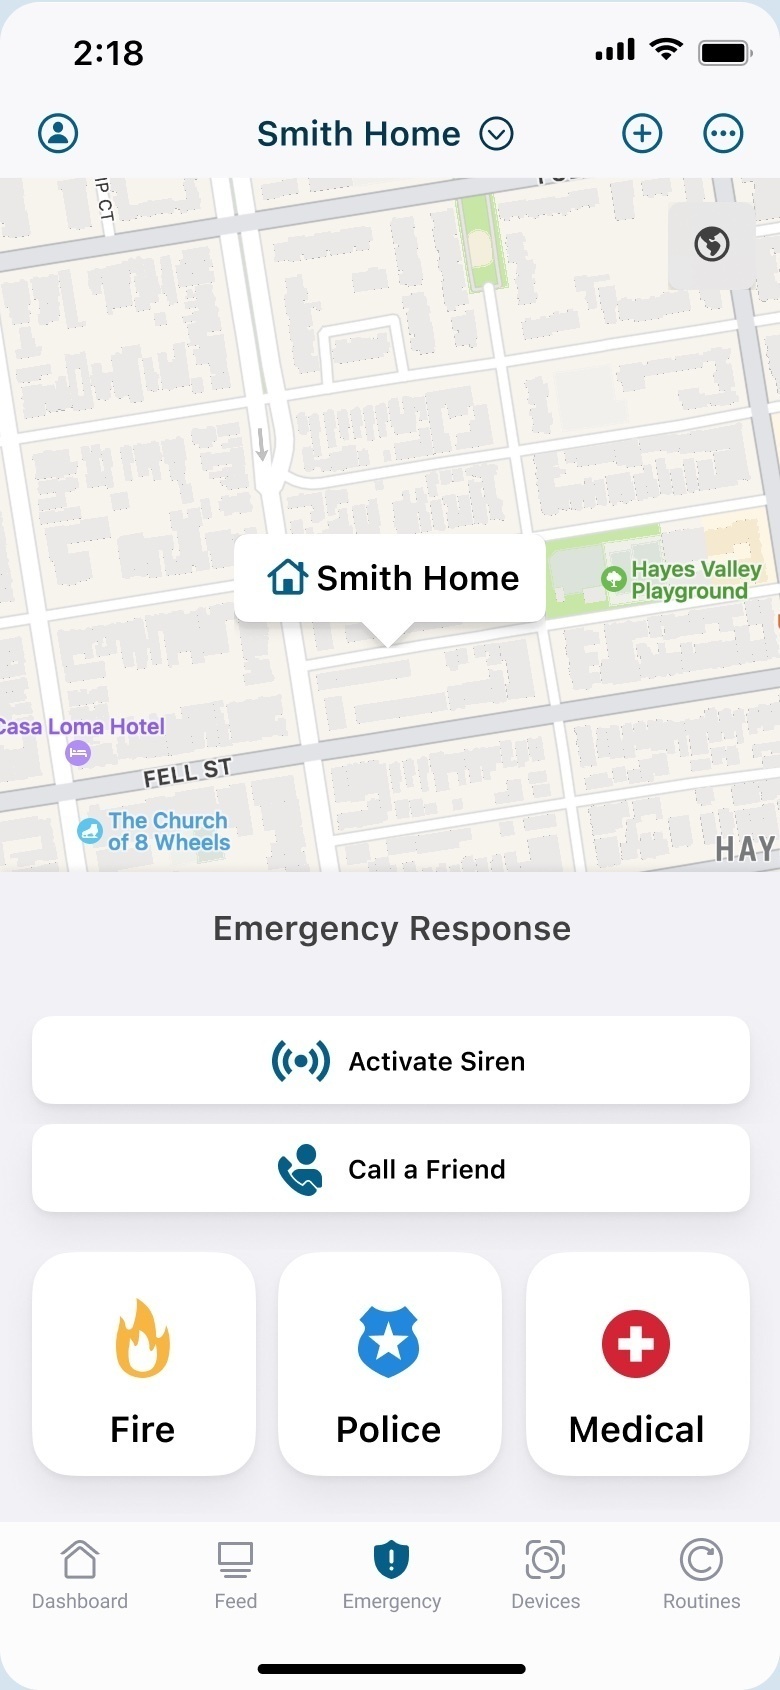 Access 24/7 Emergency Response